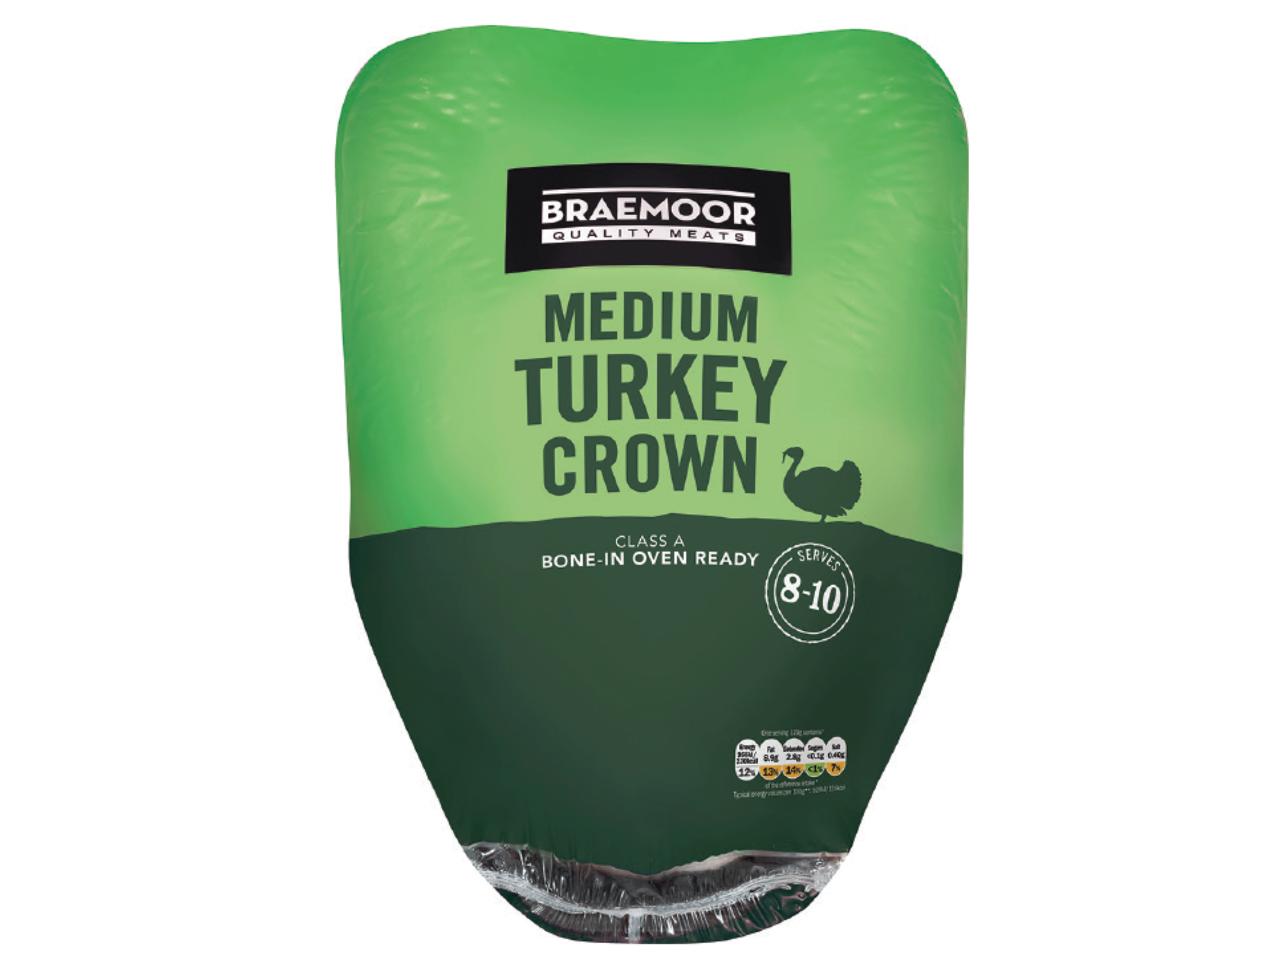 BRAEMOOR Medium Turkey Crown